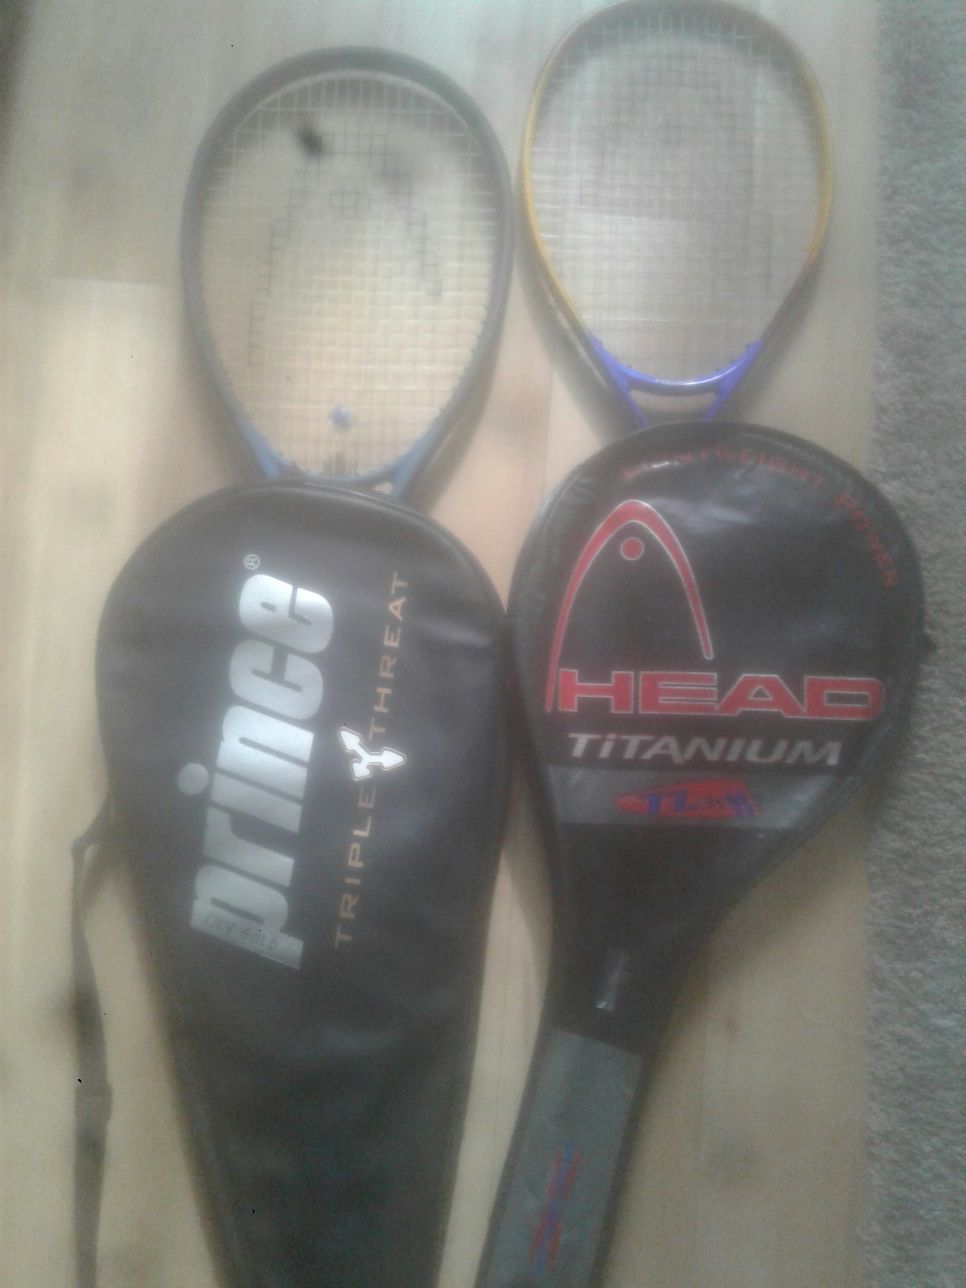 Head brand tennis rackets.